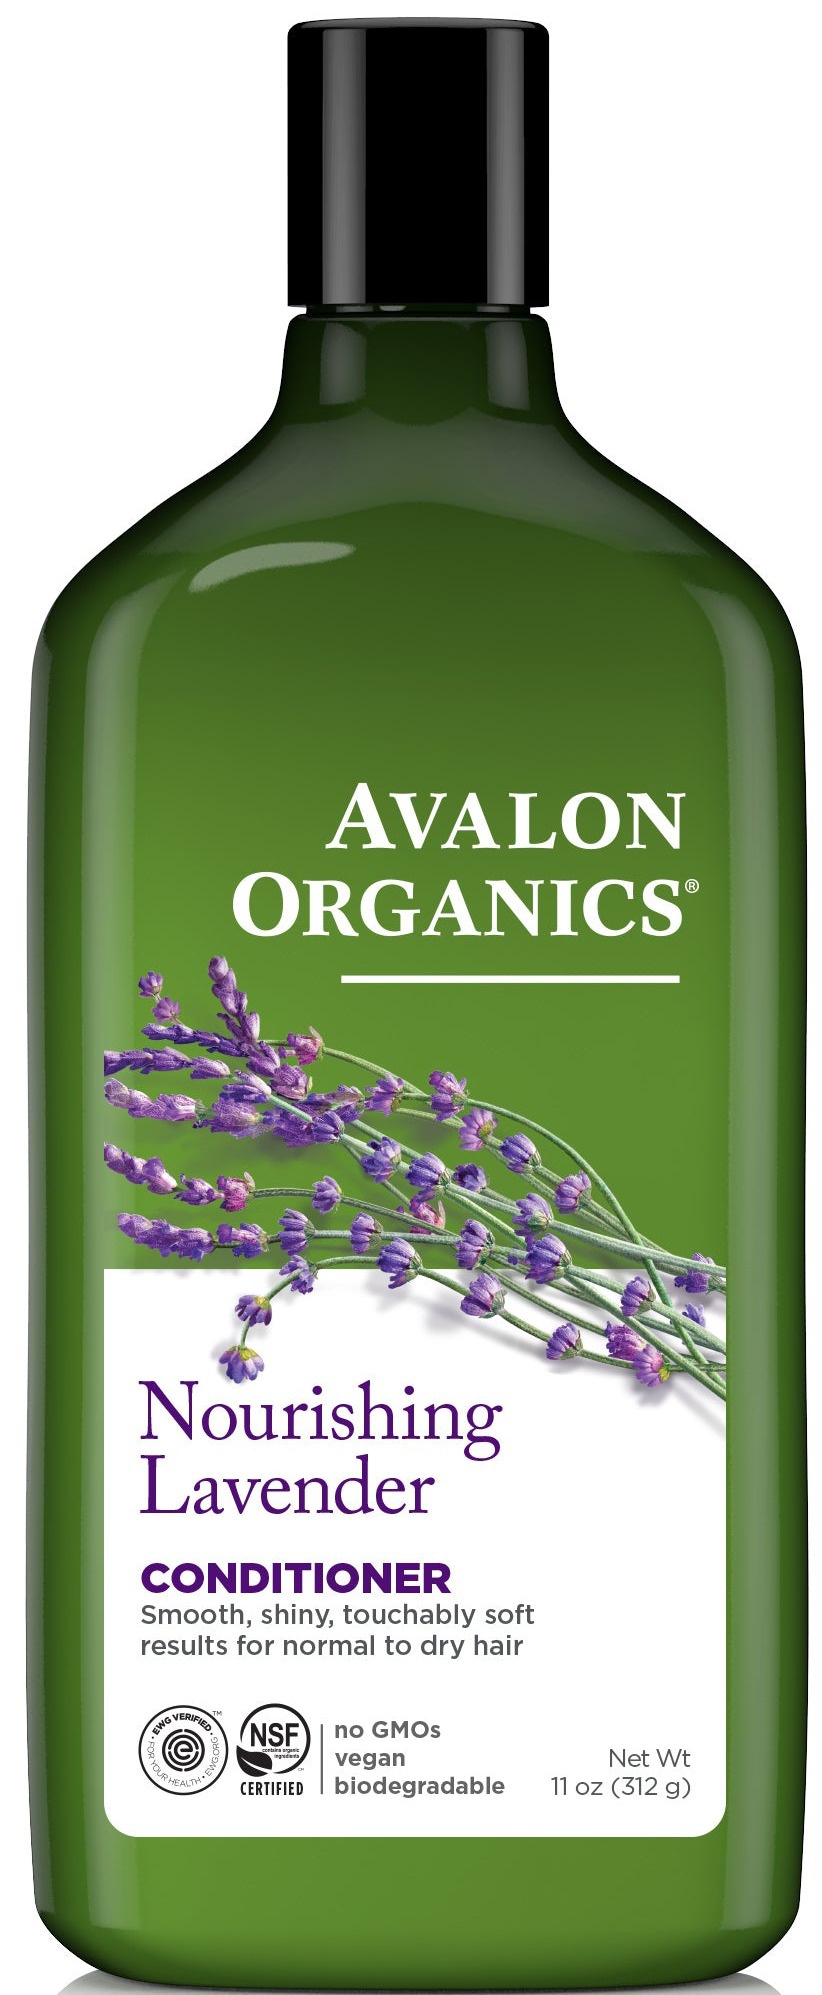 Avalon Organics Nourishing Lavender Conditioner